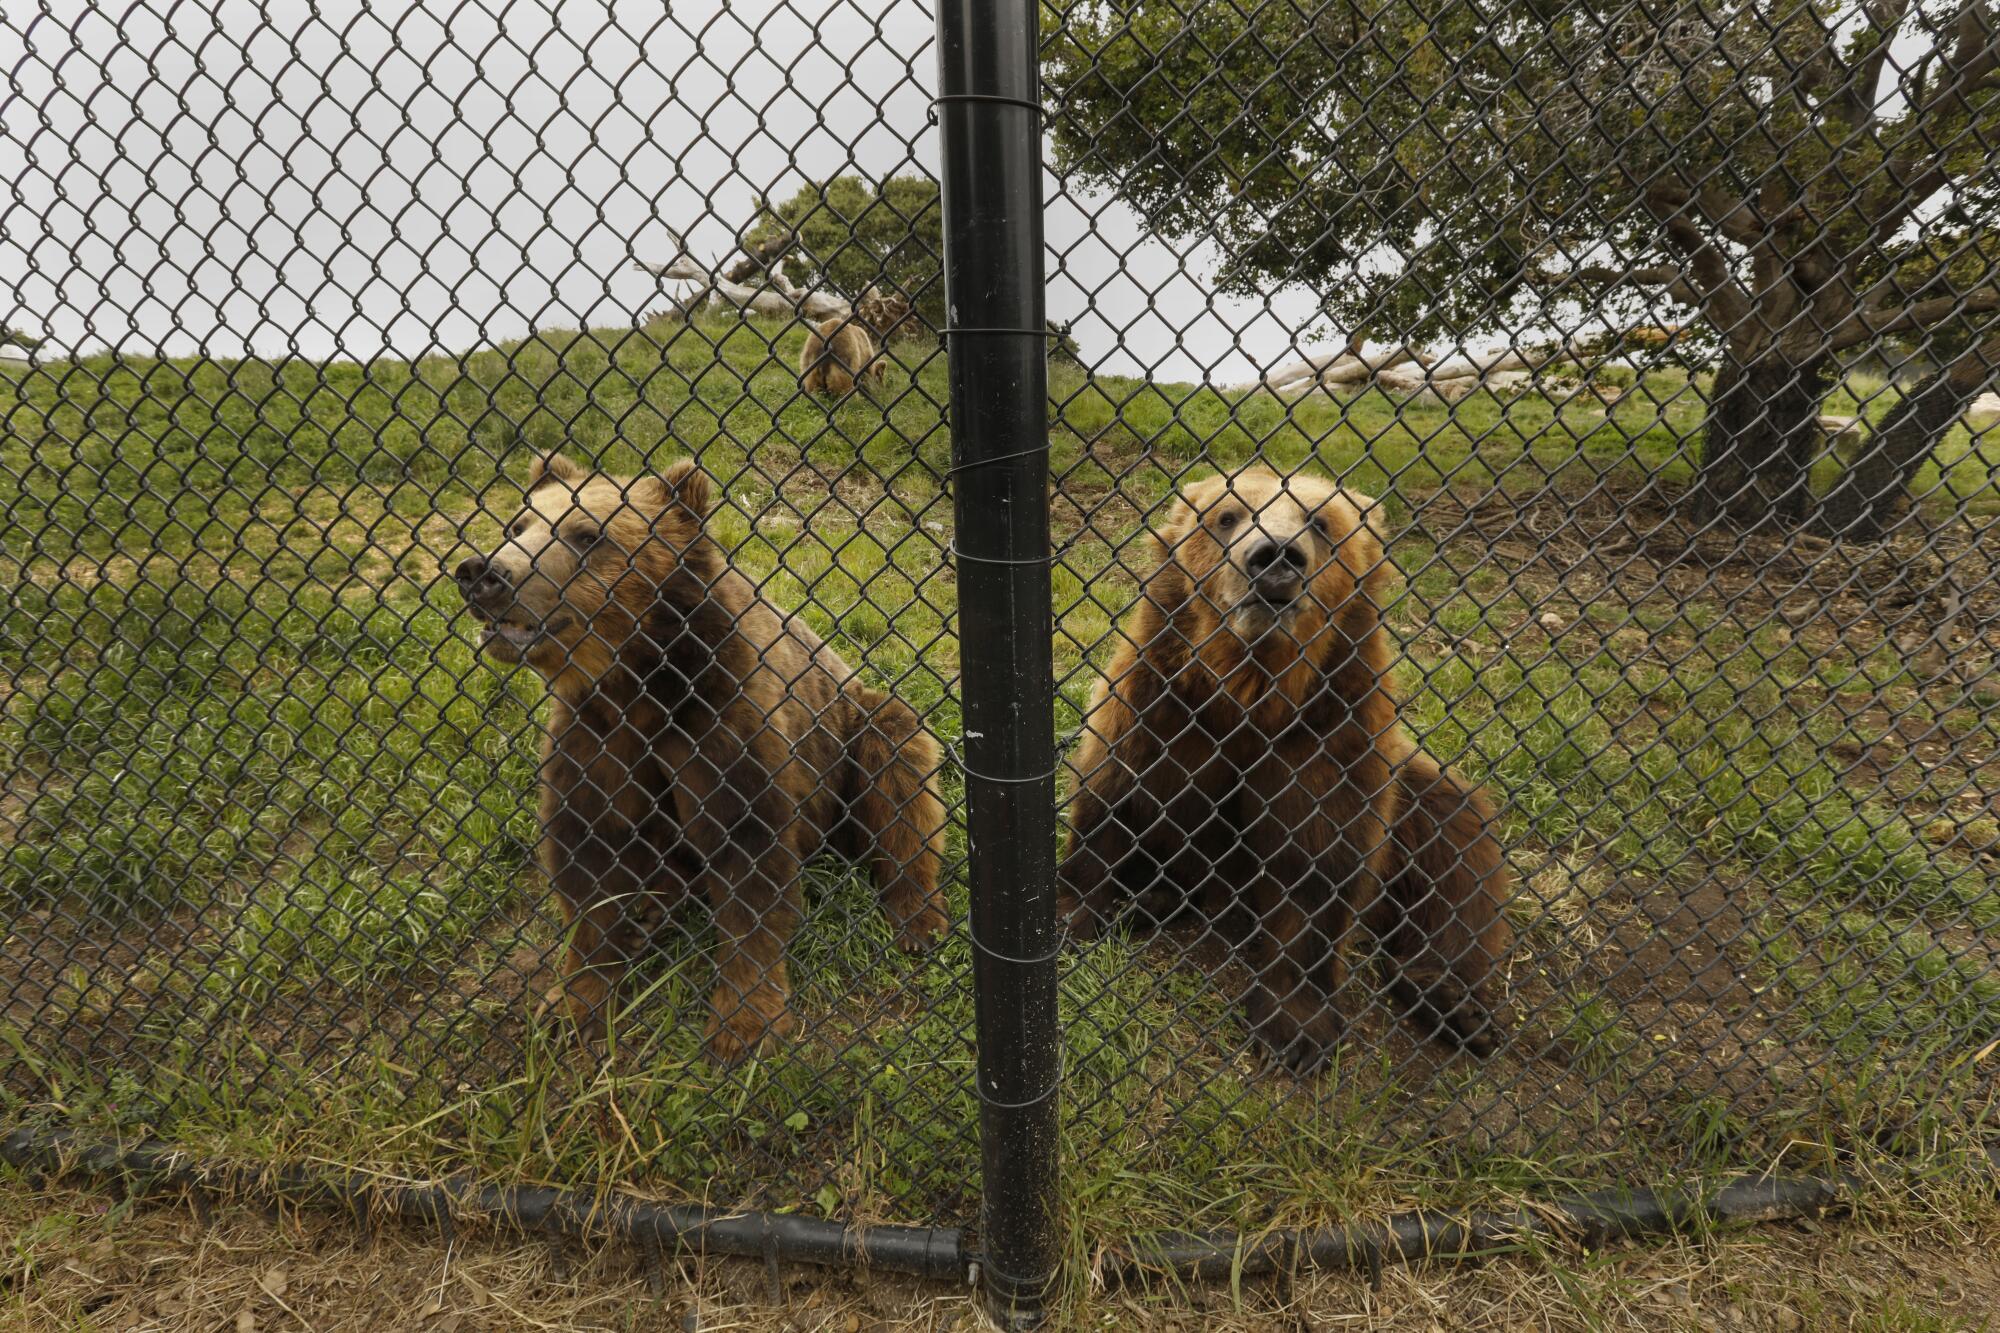 Bears at the Oakland Zoo